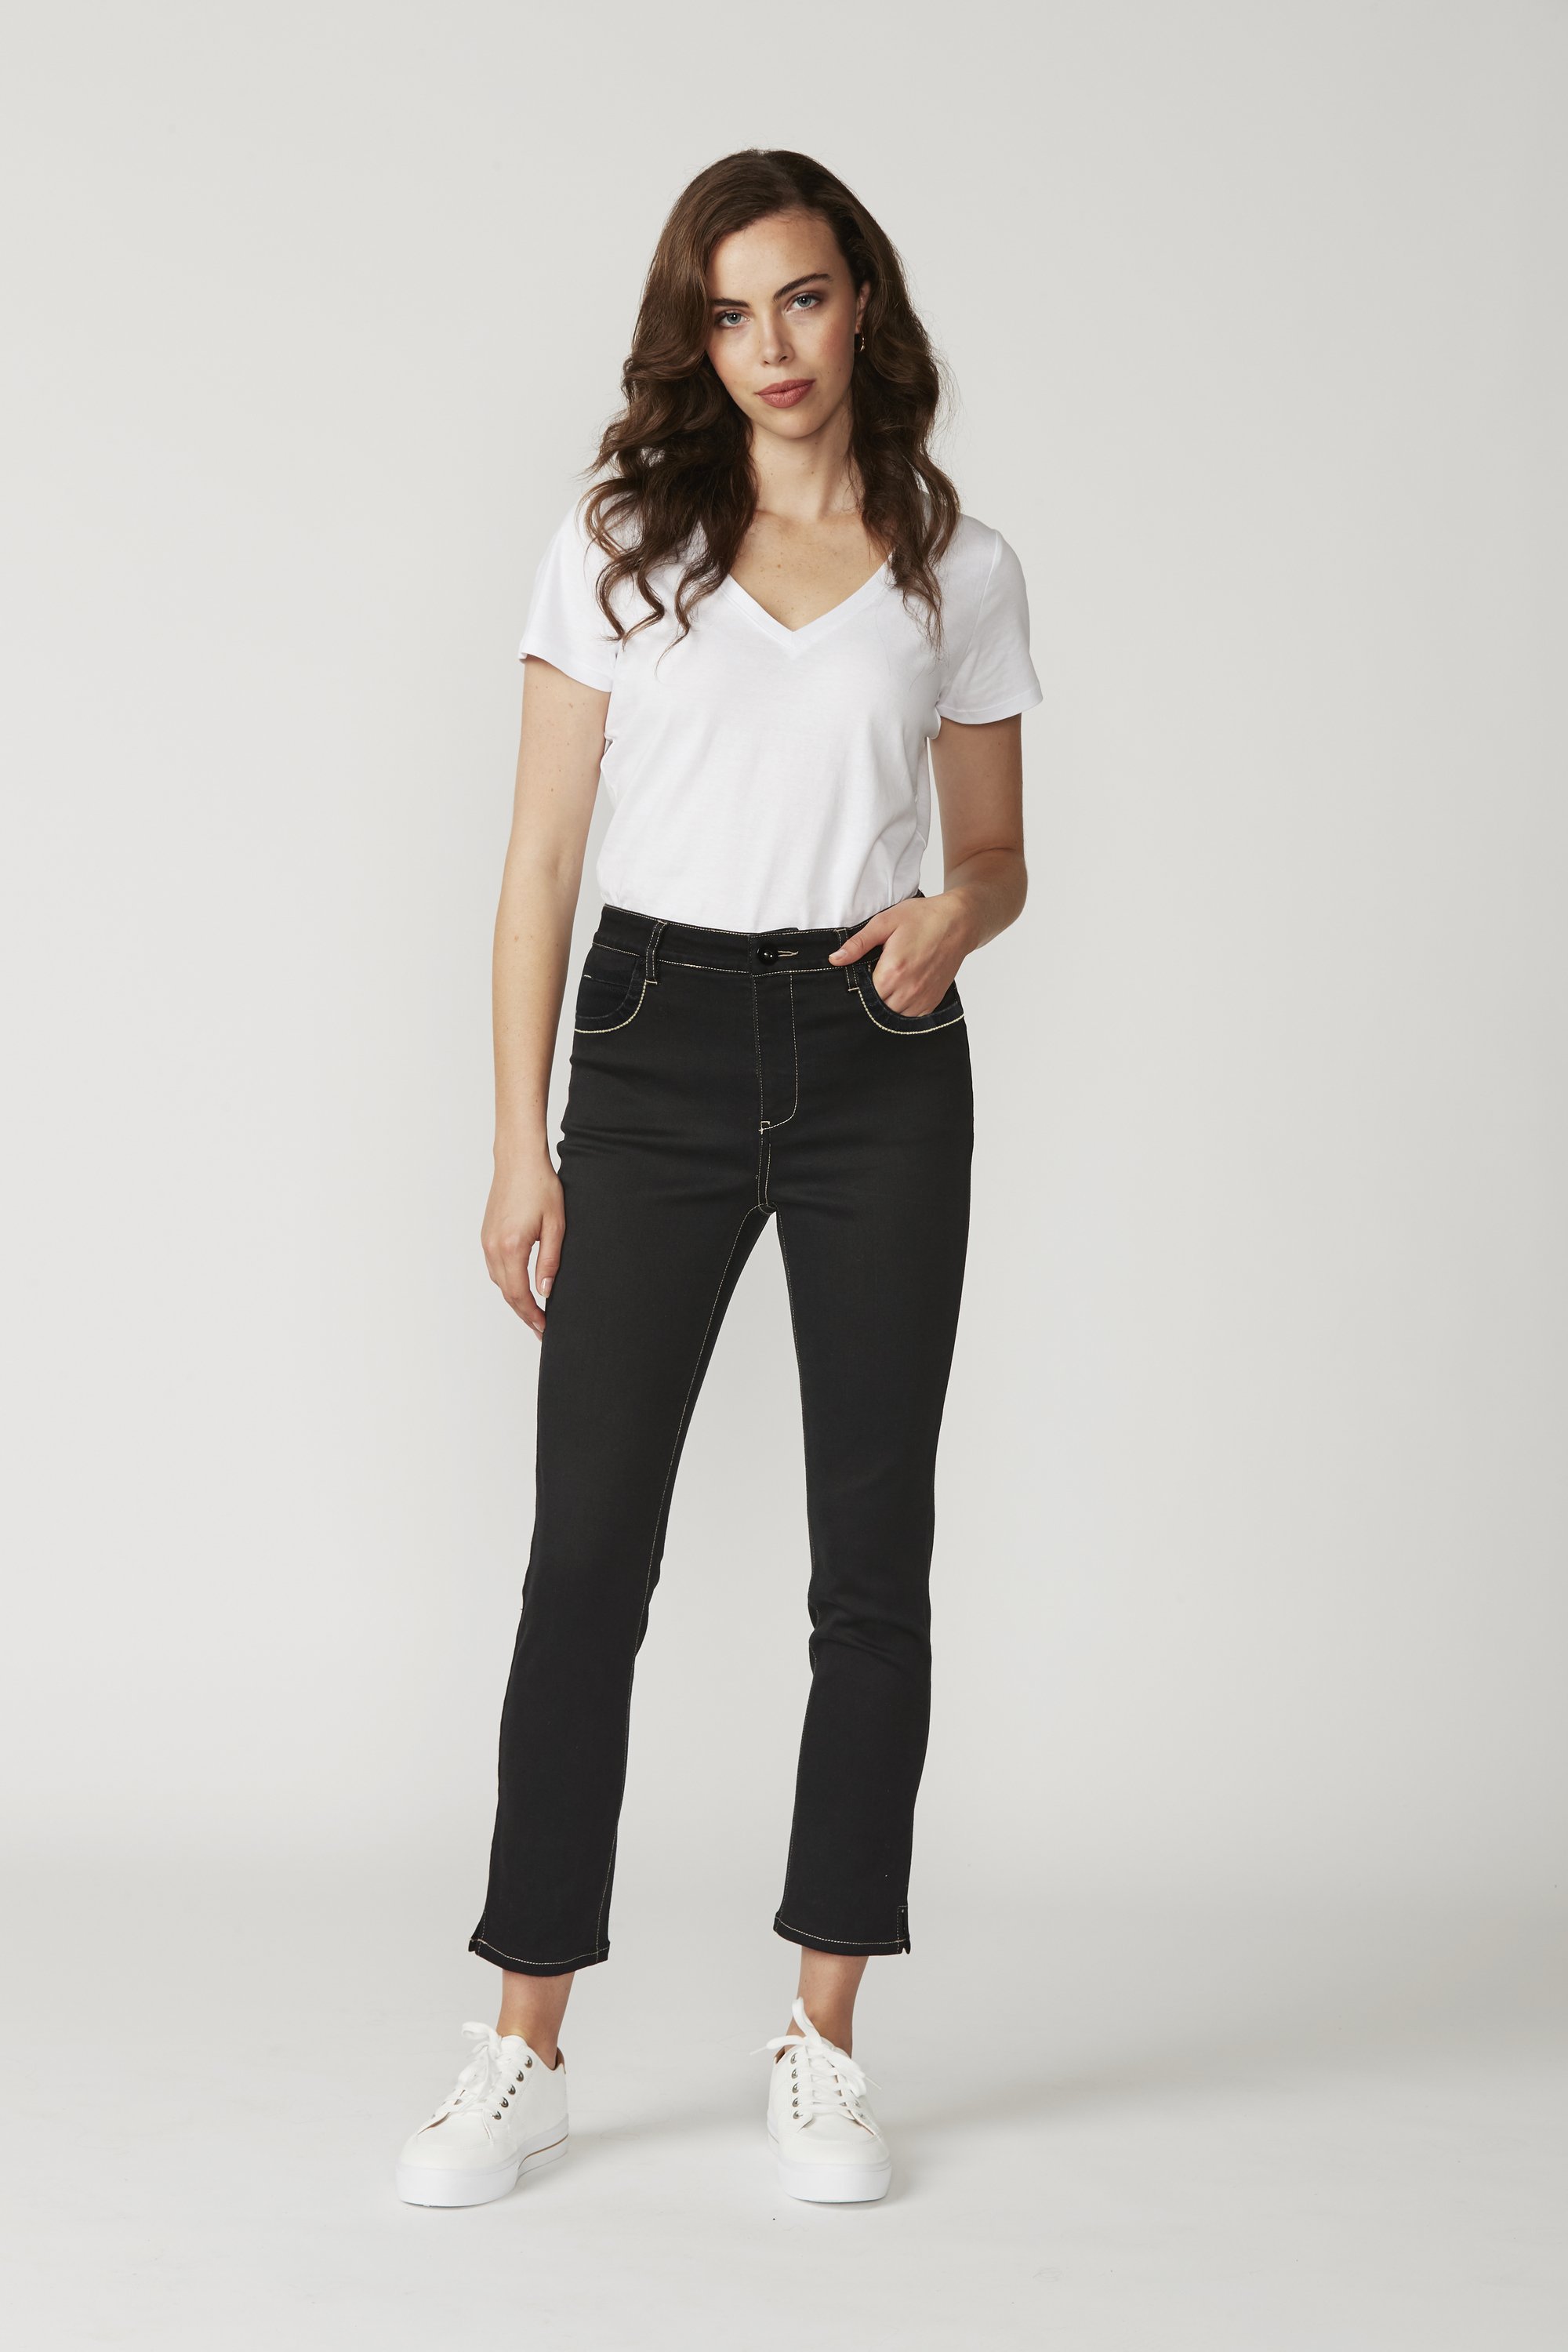 LANIA VIENNA JEAN - Jeans : Status Clothing - LANIA W 24